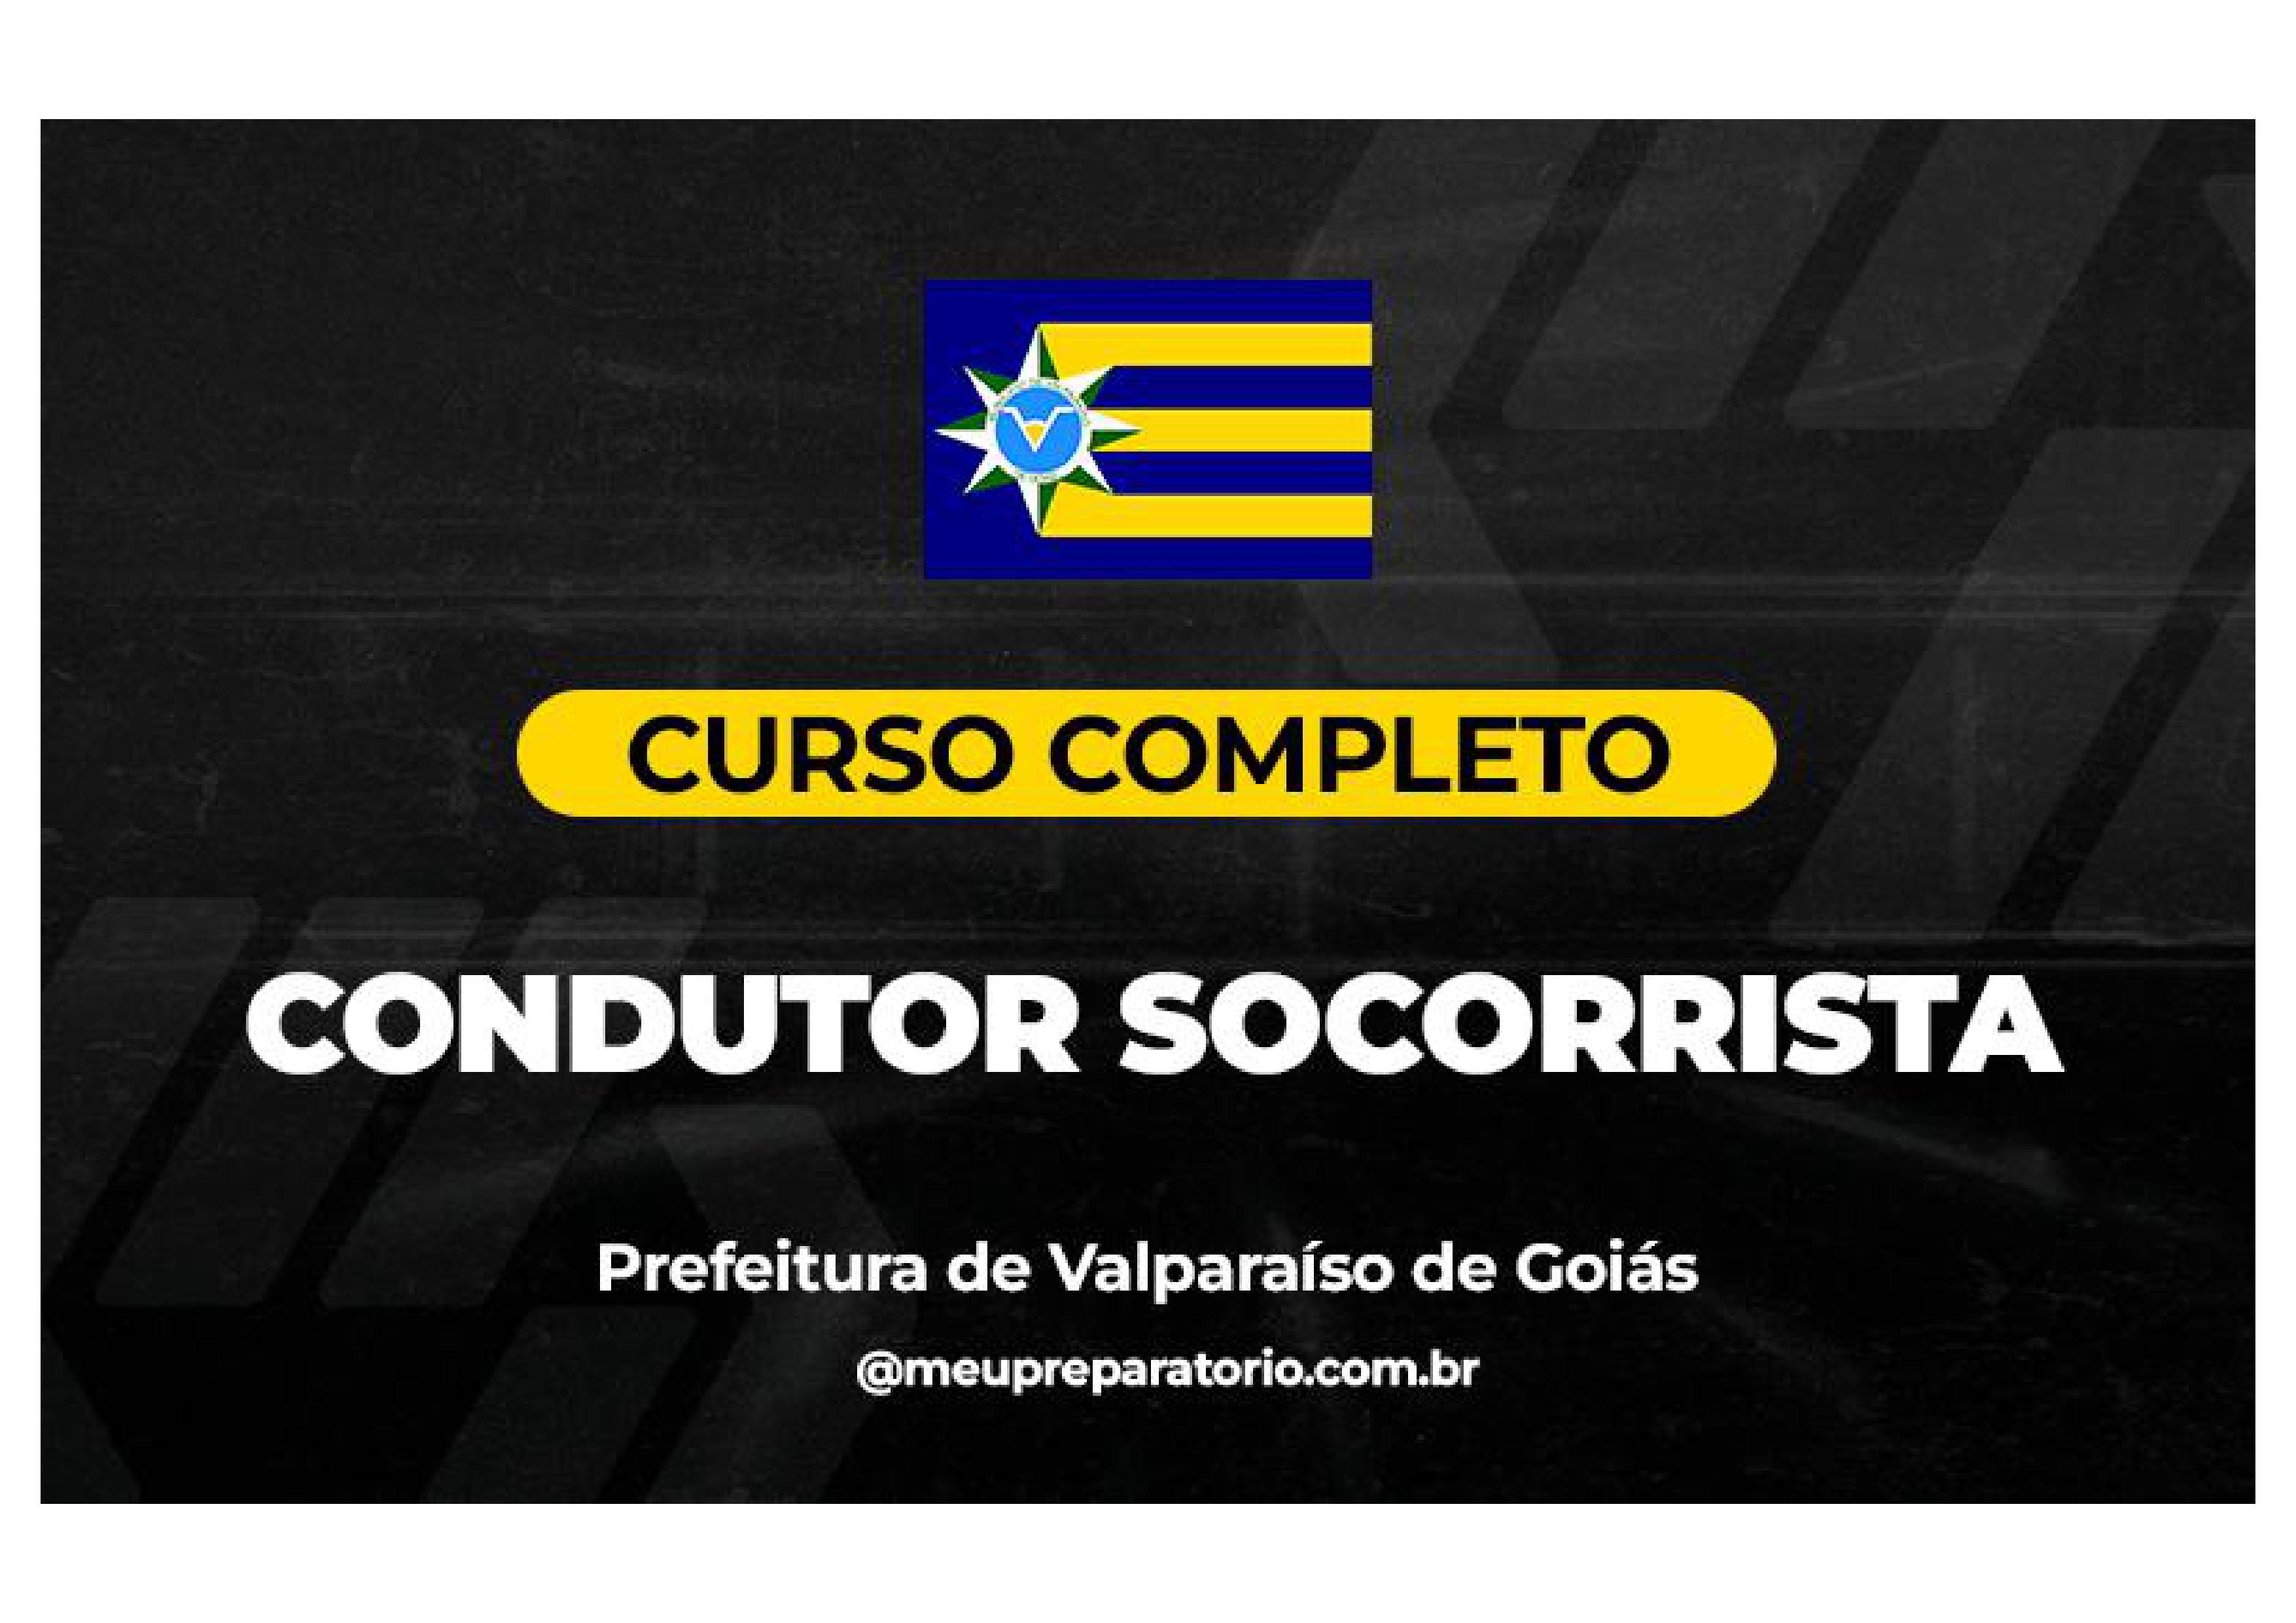 Condutor Socorrista - Valparaíso (GO)